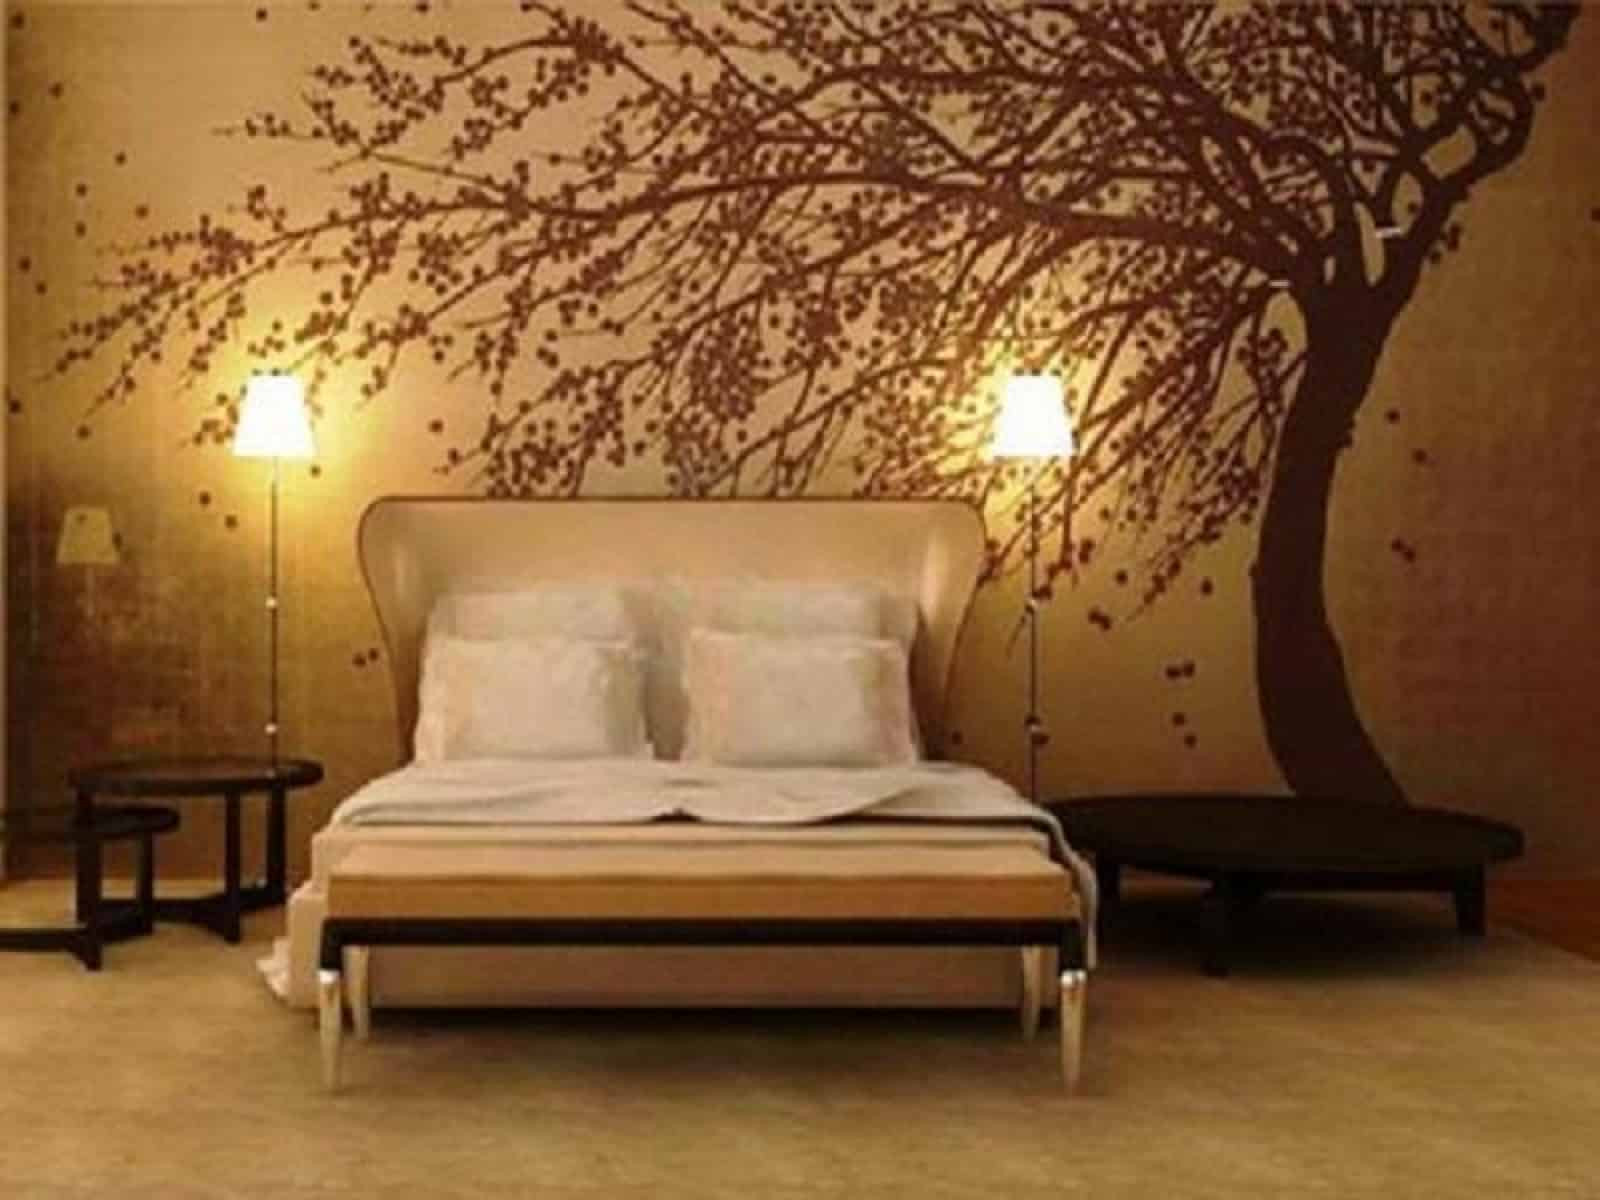 Wallpapers For Bedroom Walls
 Most Inspiring Bedroom Wallpaper Ideas Decoration Channel